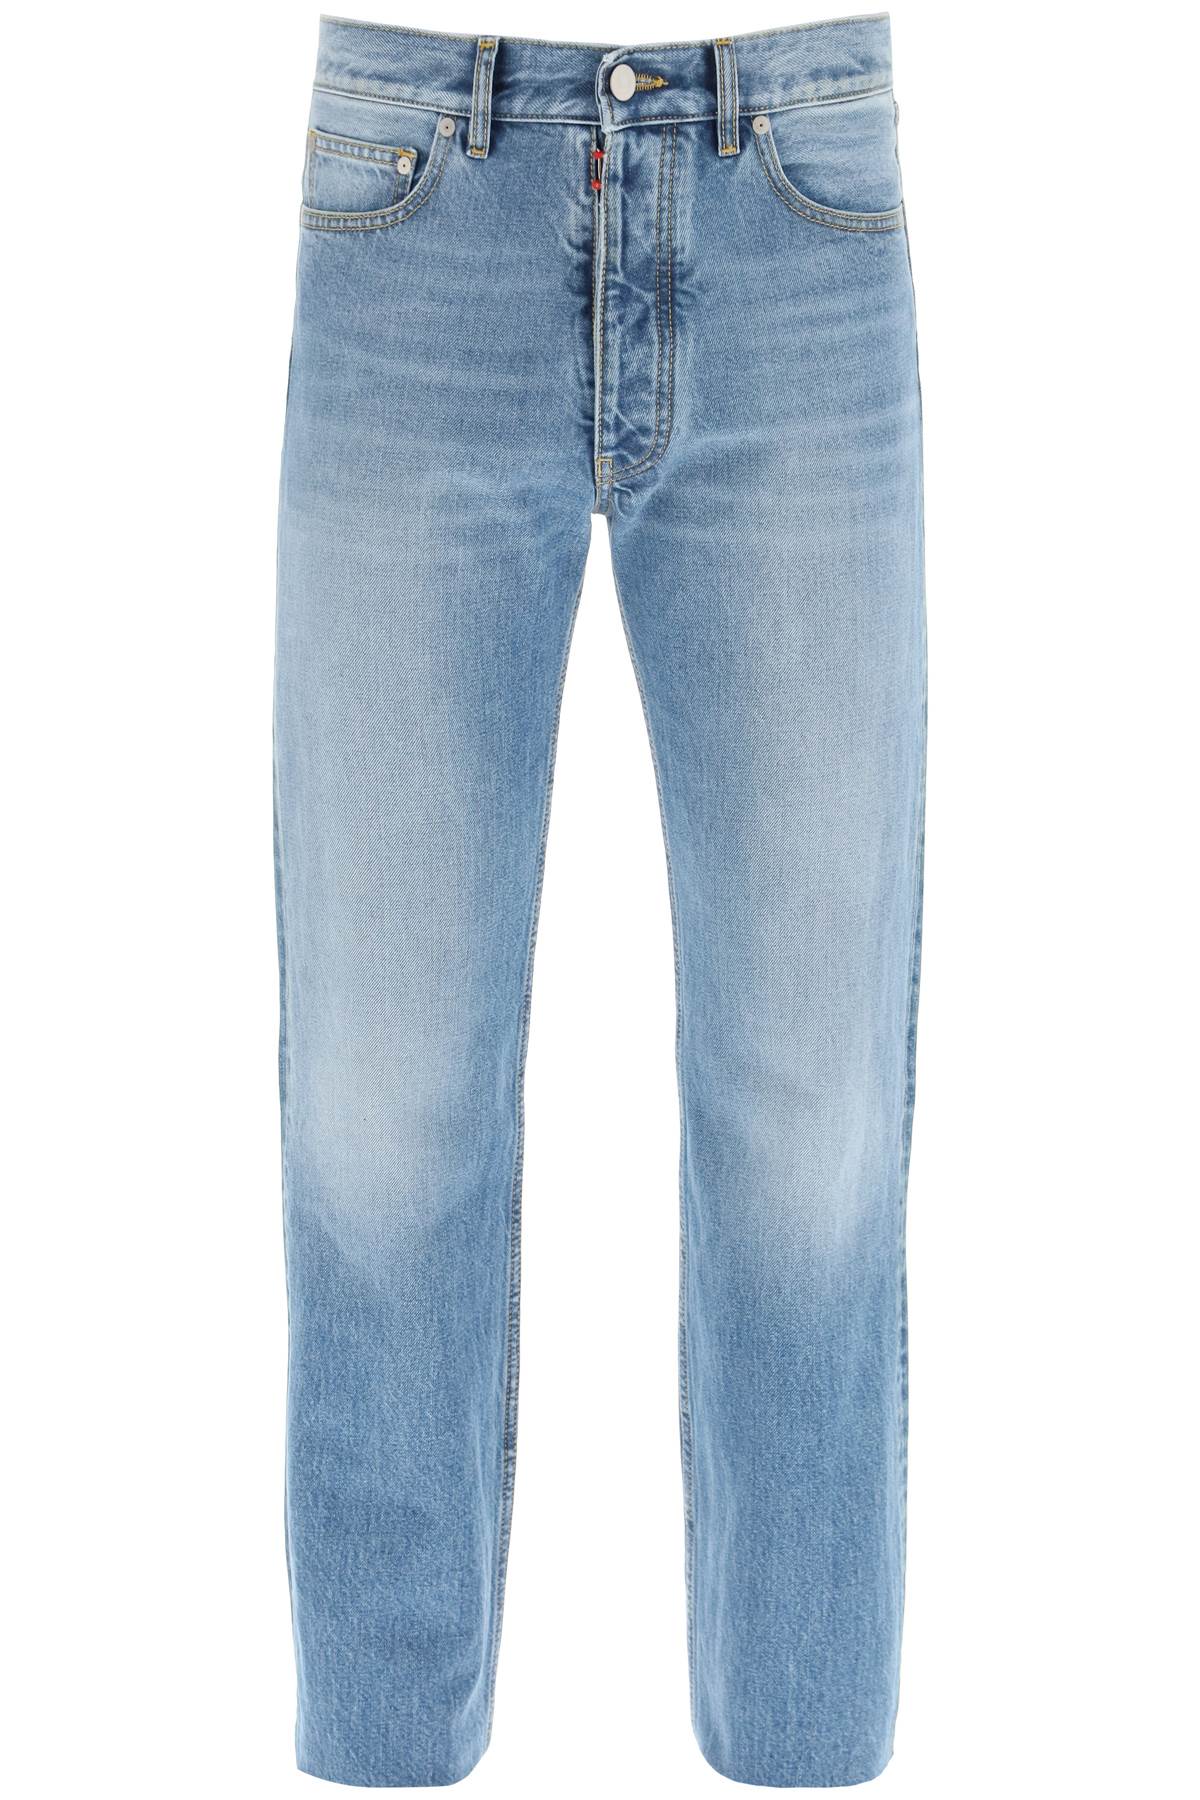 Maison margiela five-pocket straight jeans-0